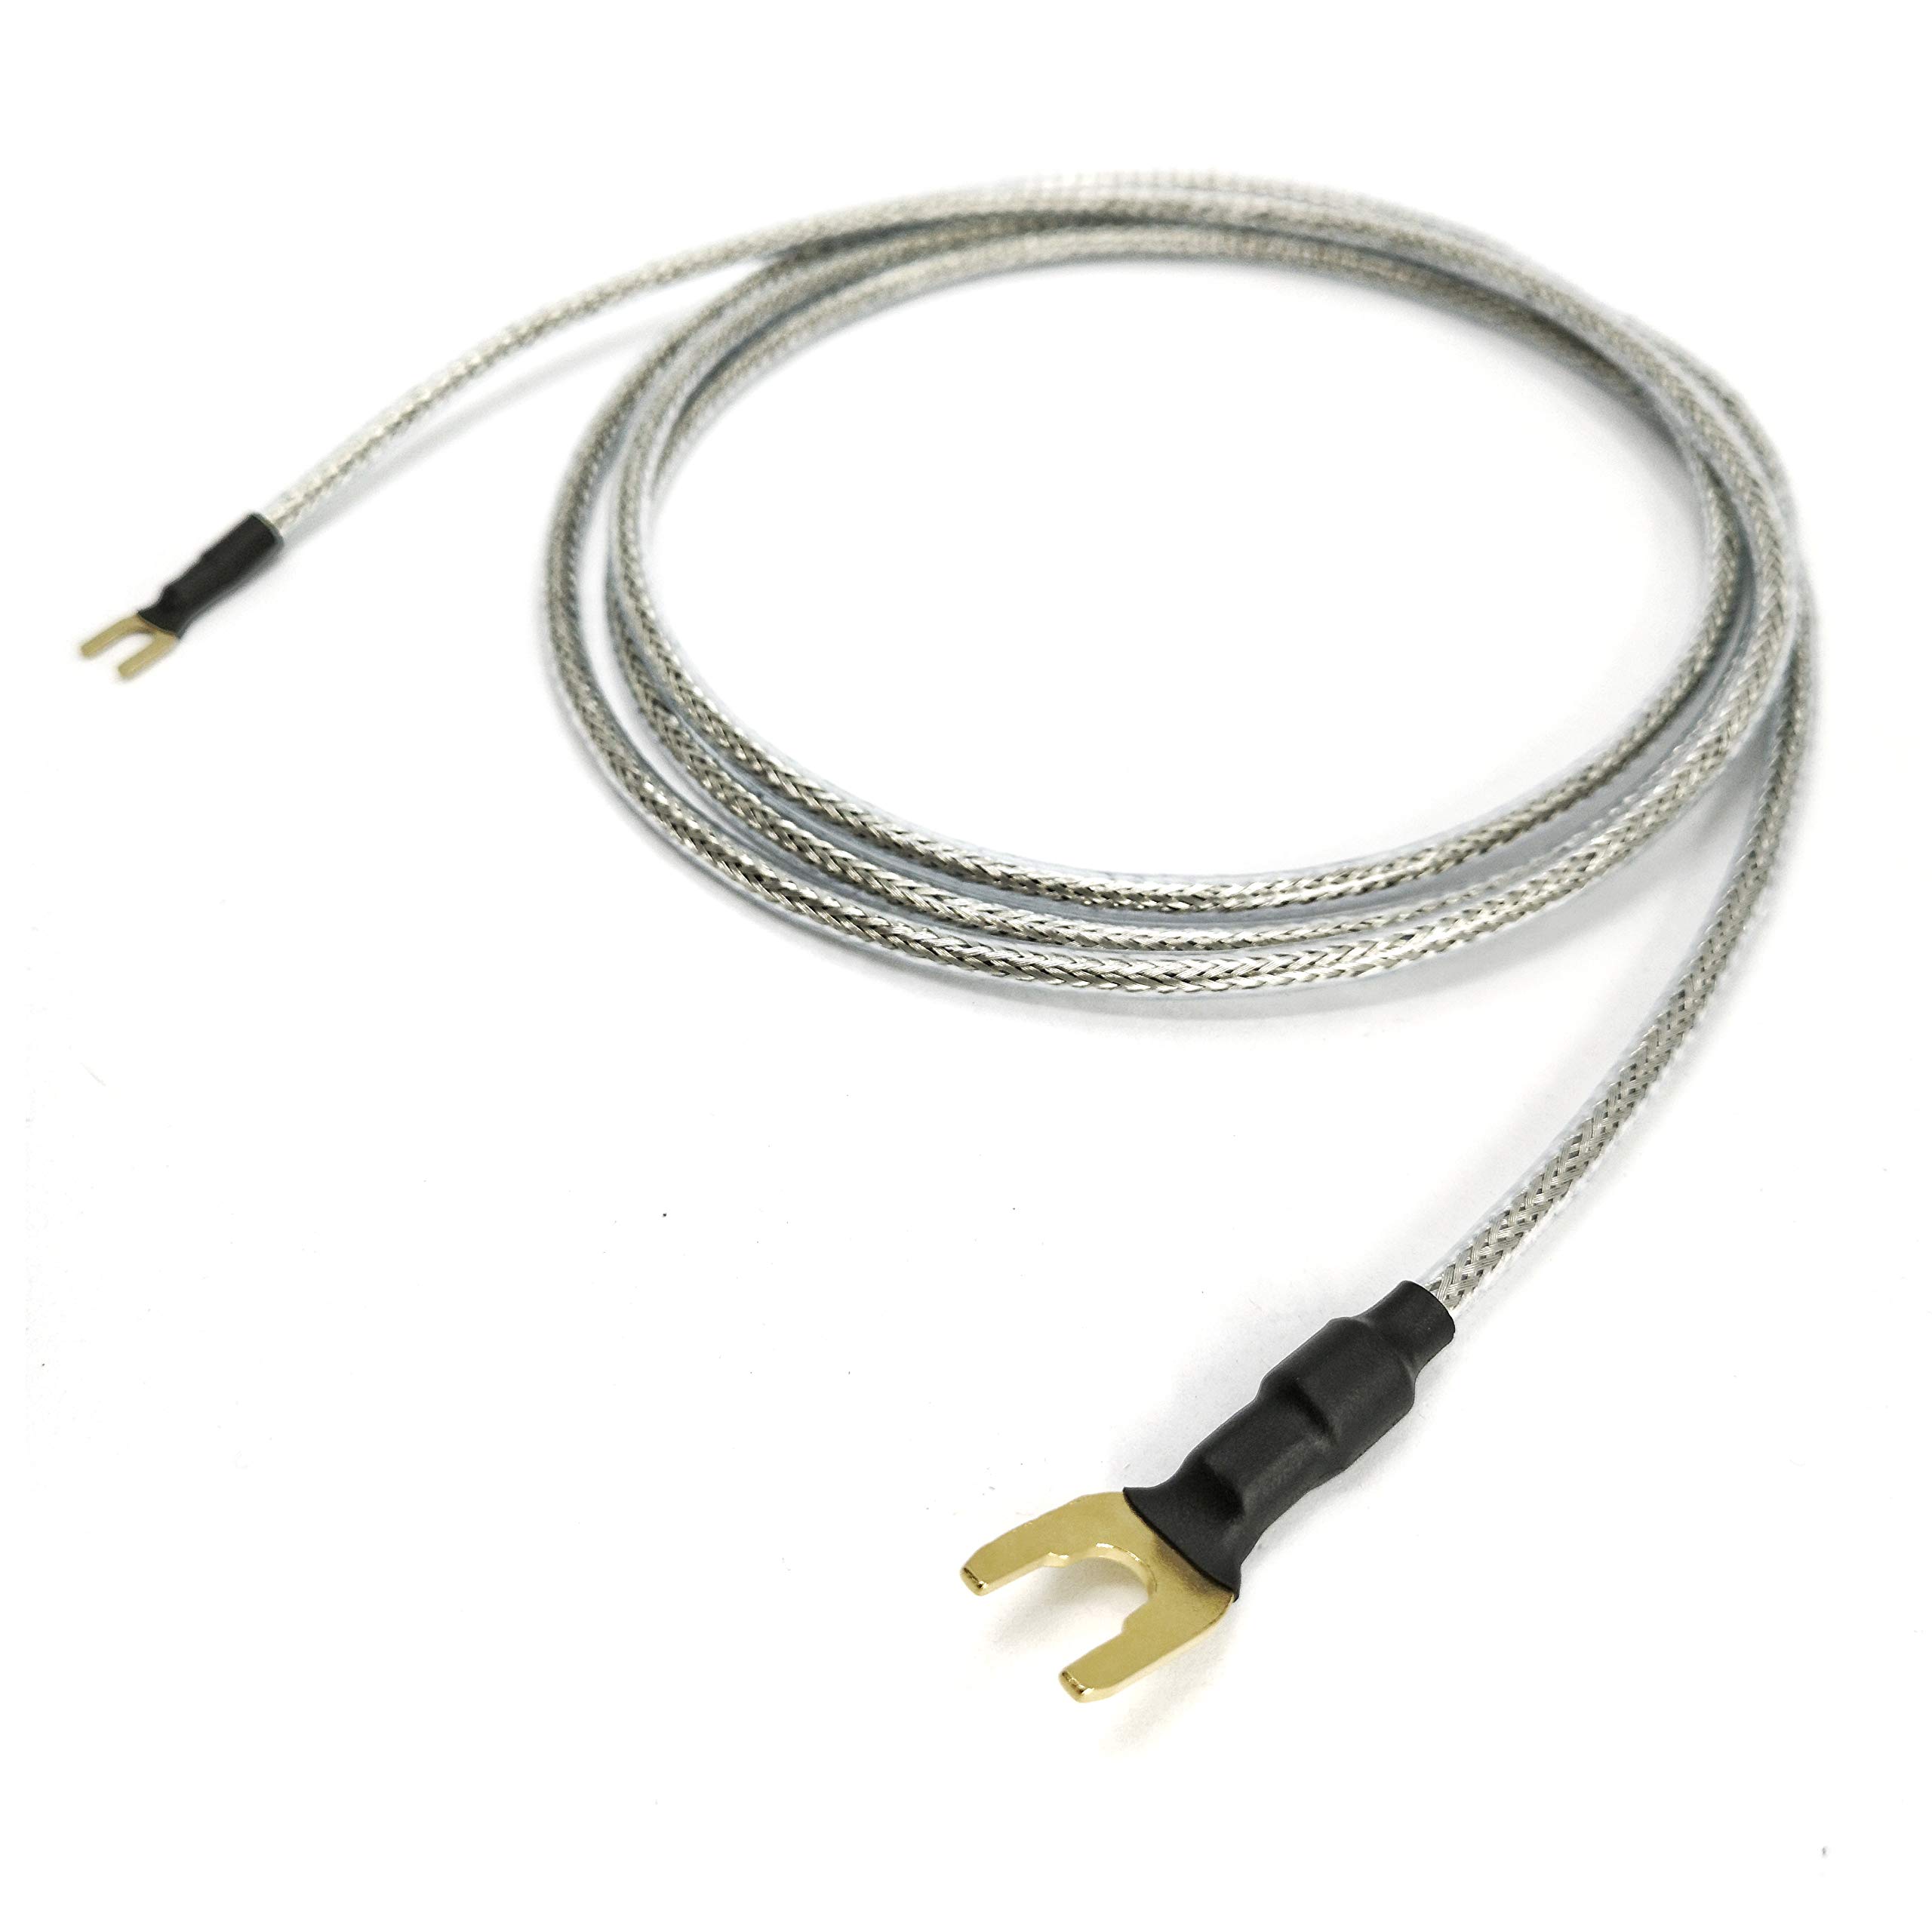 Selected Cable 2m Plattenspieler-Erdungsleitung 1x 1,0mm² für HIFI-Geräte mit Masseanschluß 2 vergoldeter Gabelschuhe (klein/groß) transparent silber Geflechtschirm (200cm)